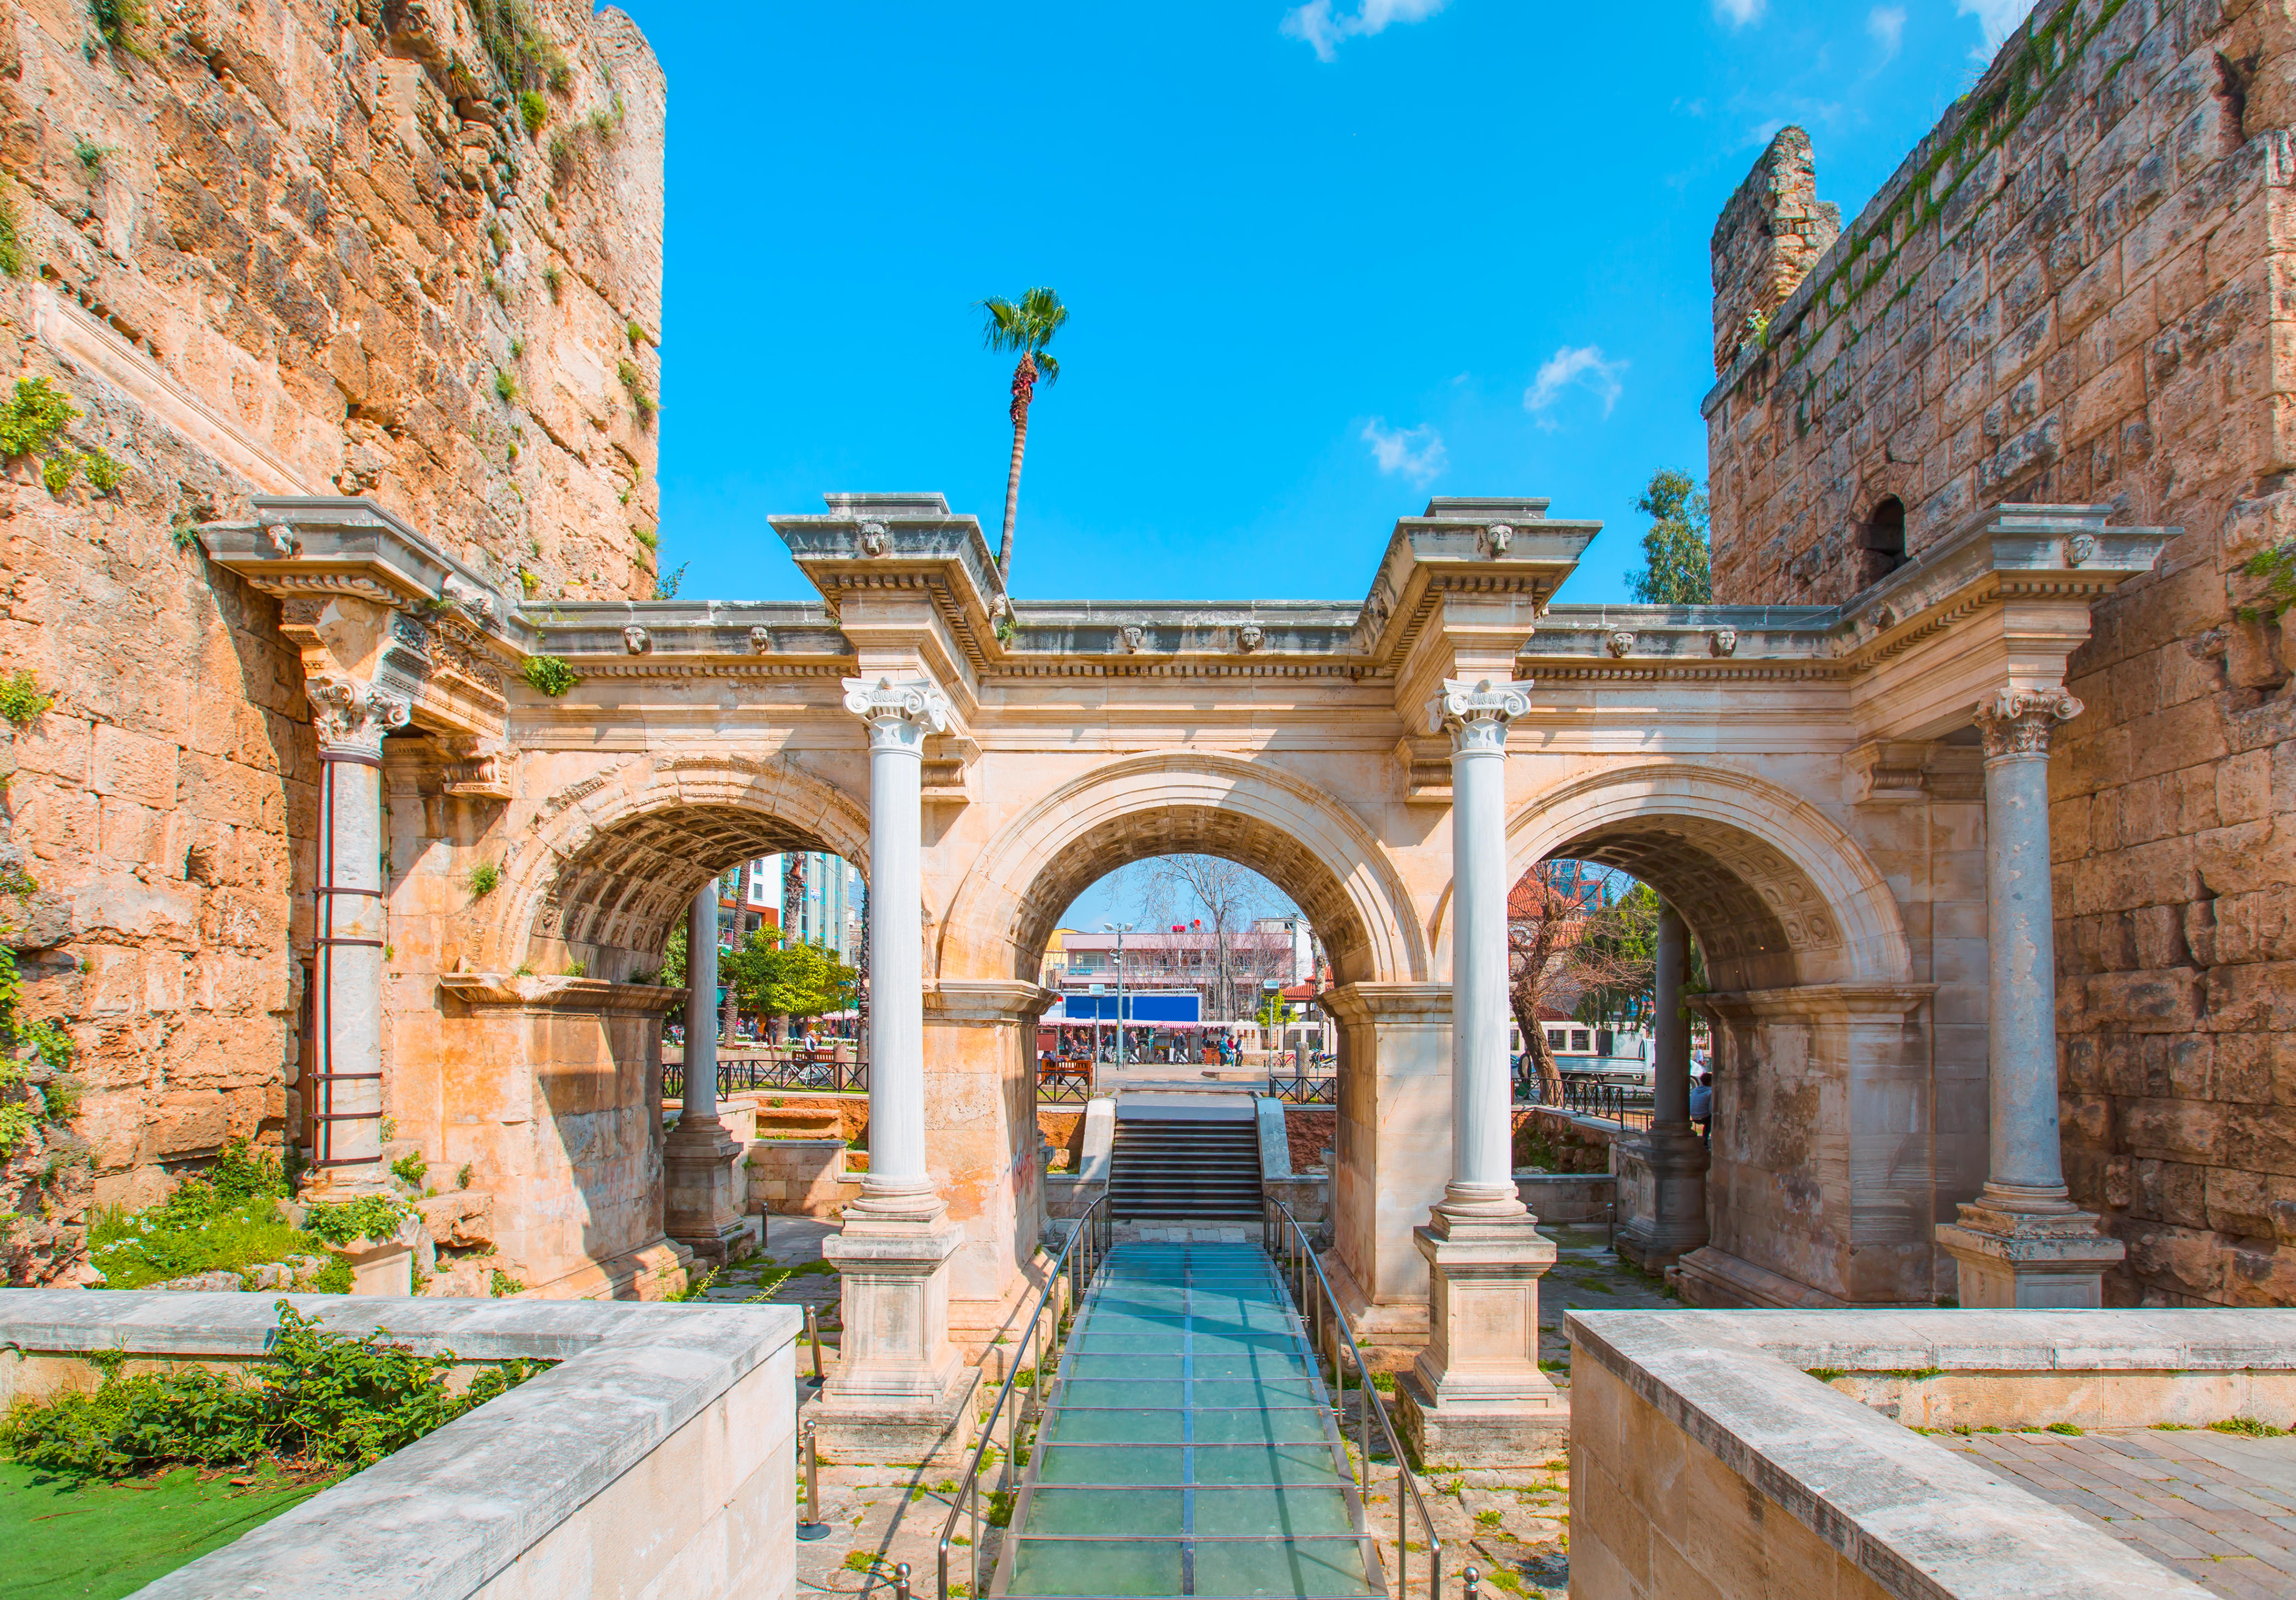 Hadrian’s Gate